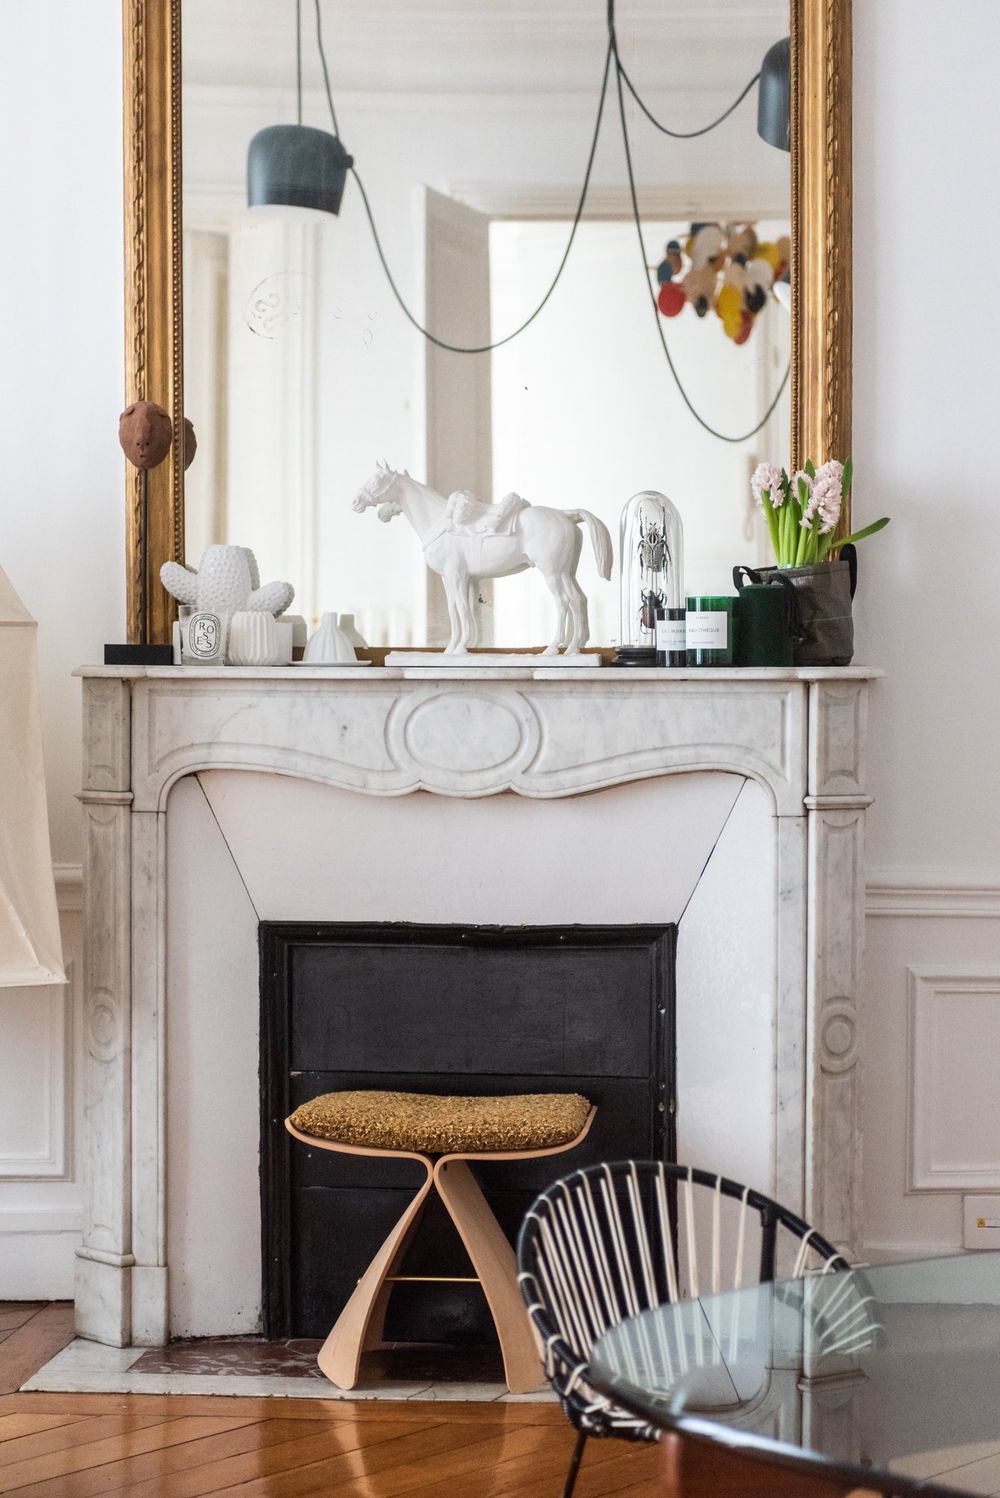 Parisian fireplace via aline-belda the socialite family